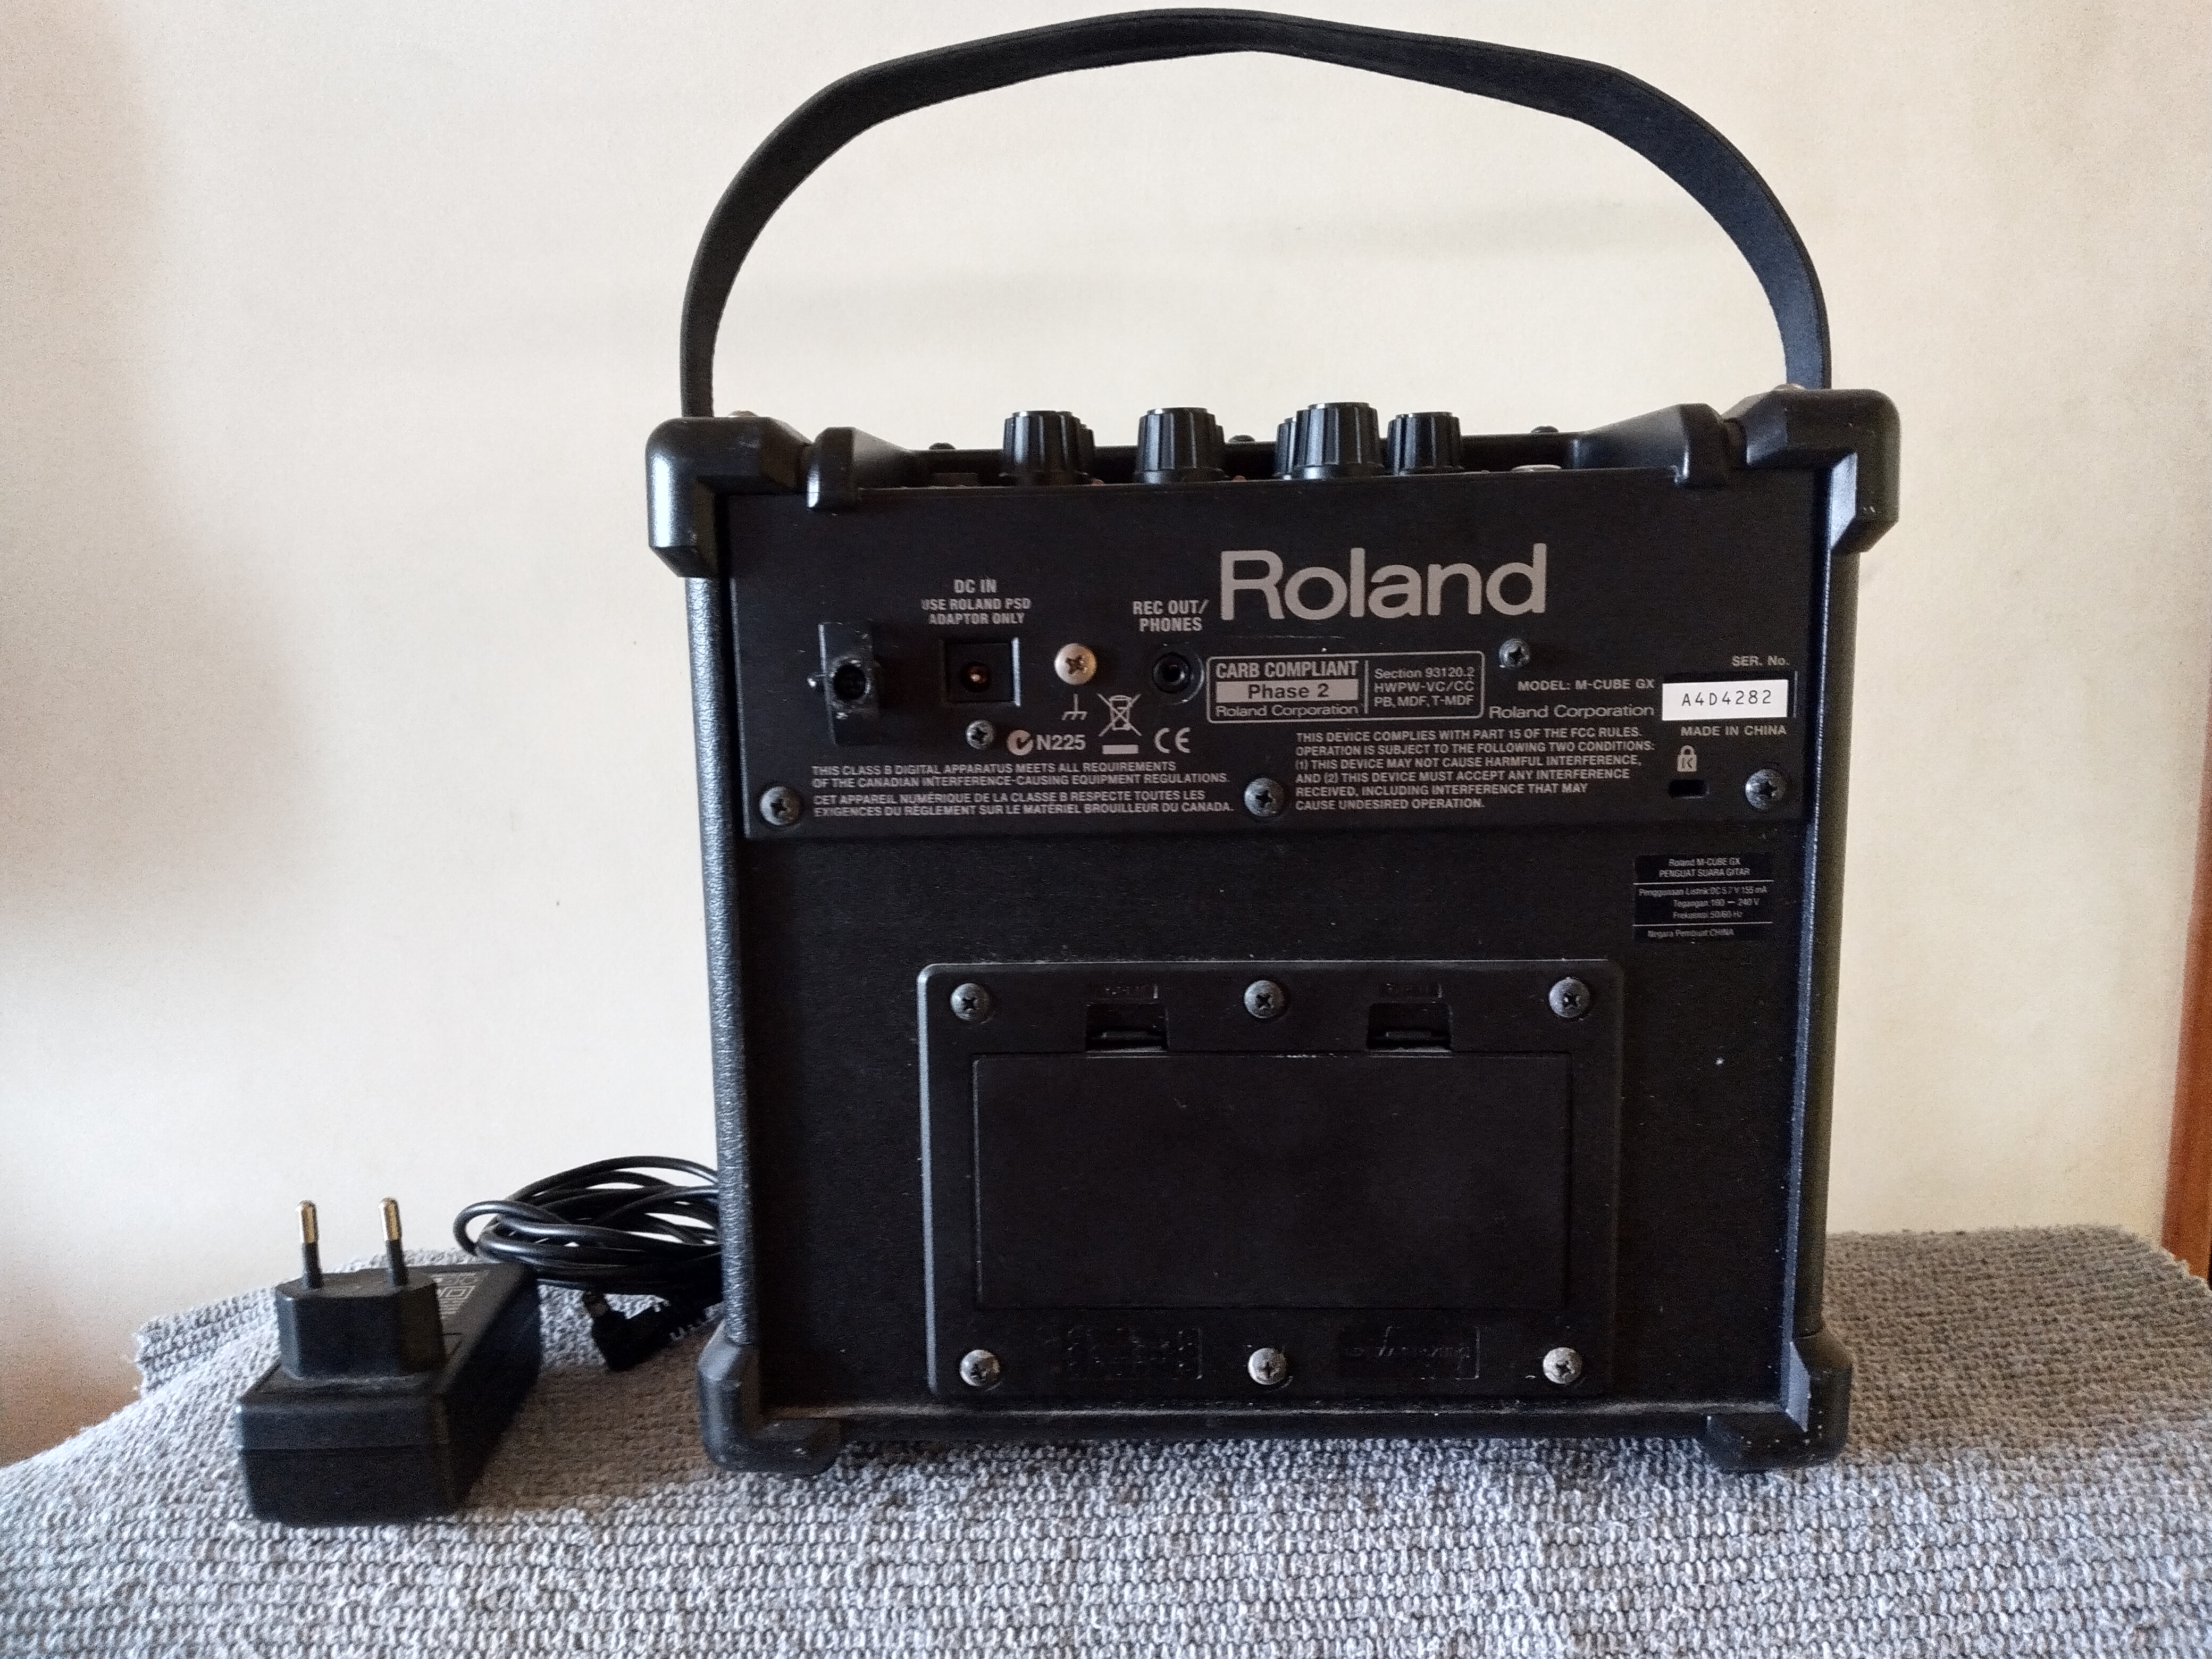 Micro Cube - Roland Micro Cube - Audiofanzine